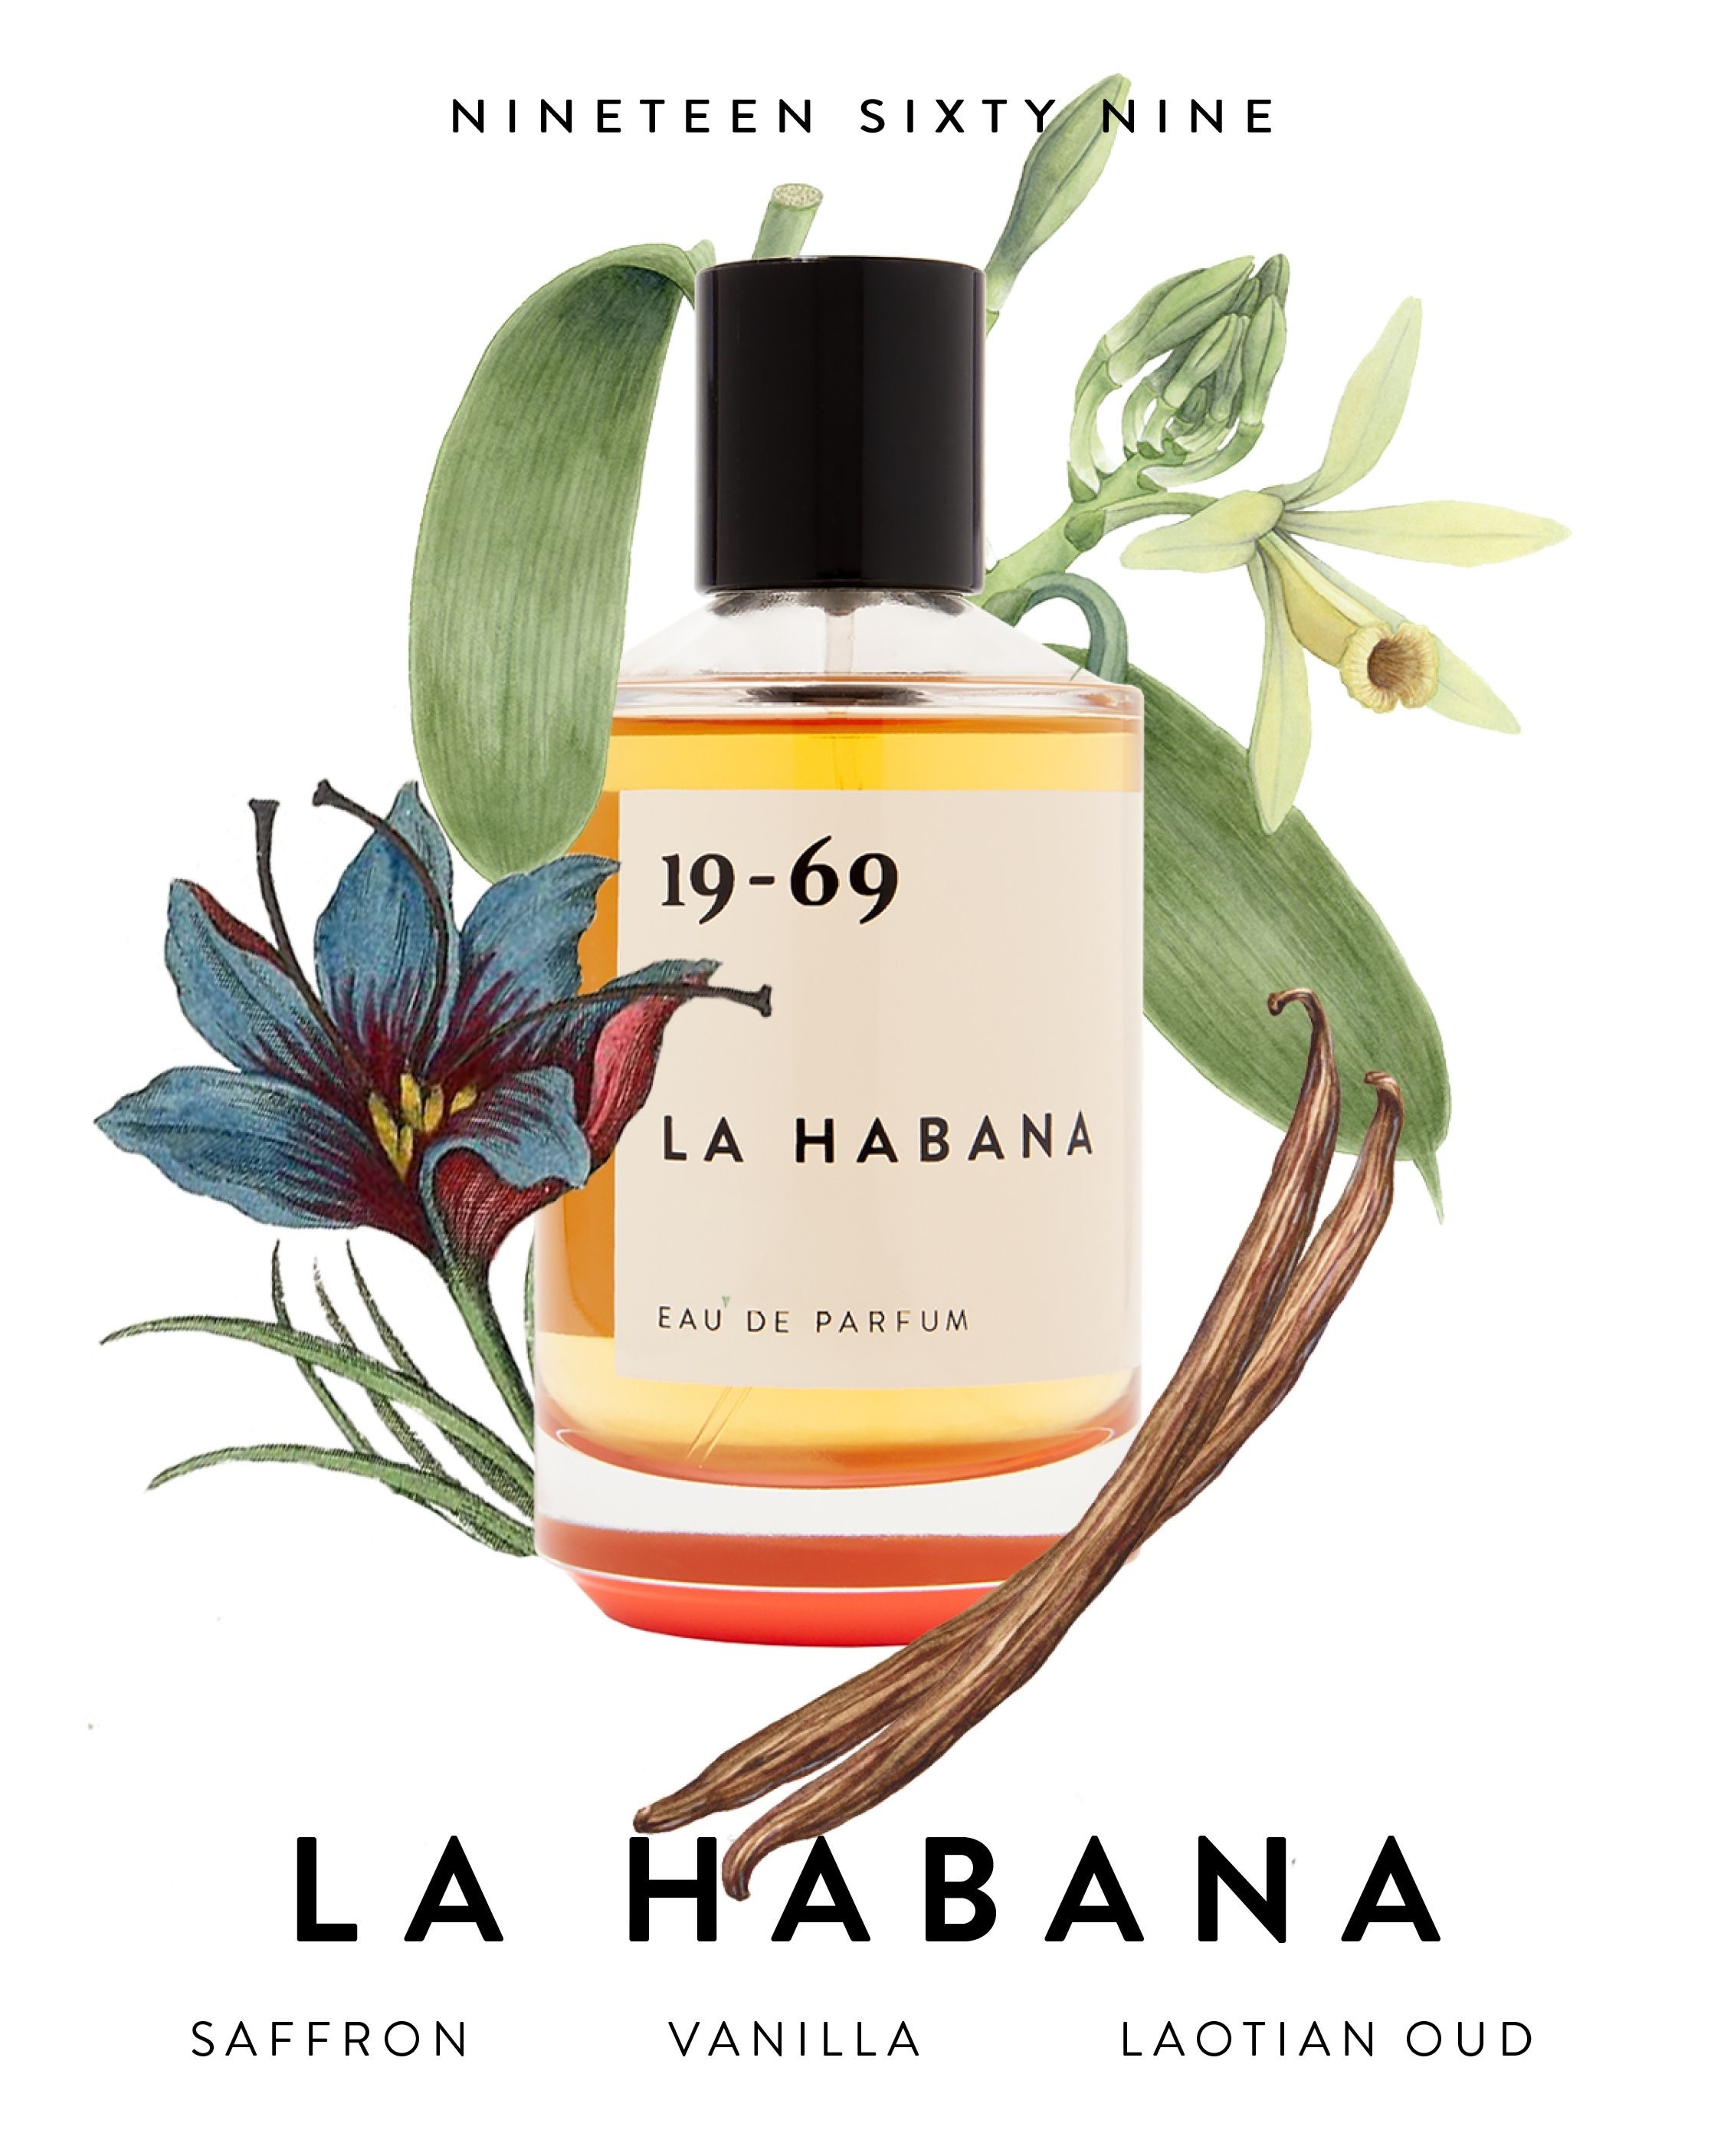 19-69 LA HABANAオードパルファム100ml - 香水